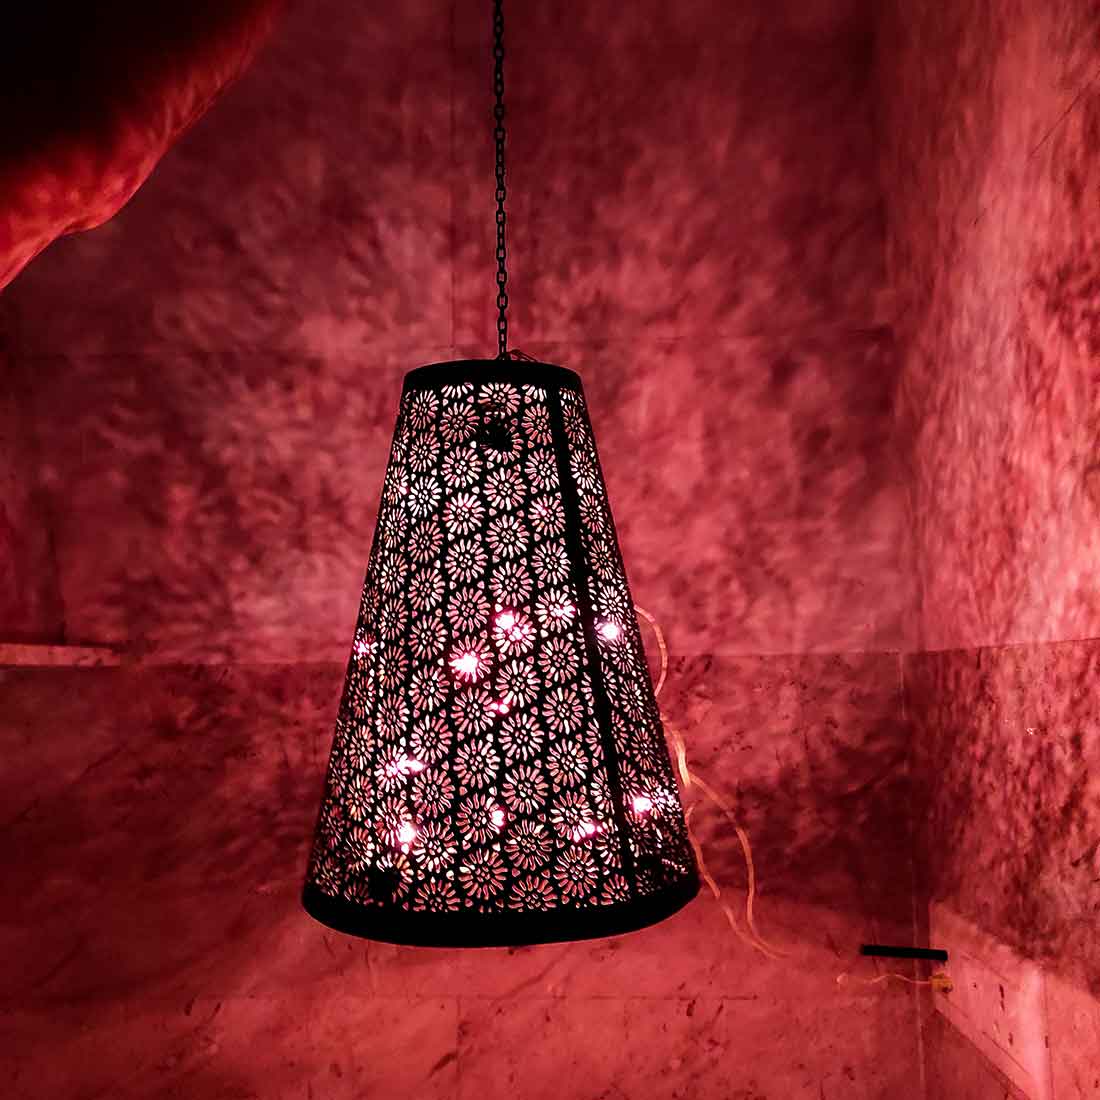 Hanging Lamp | Wall Lights for Hall & Living Room - 11 Inch - ApkaMart